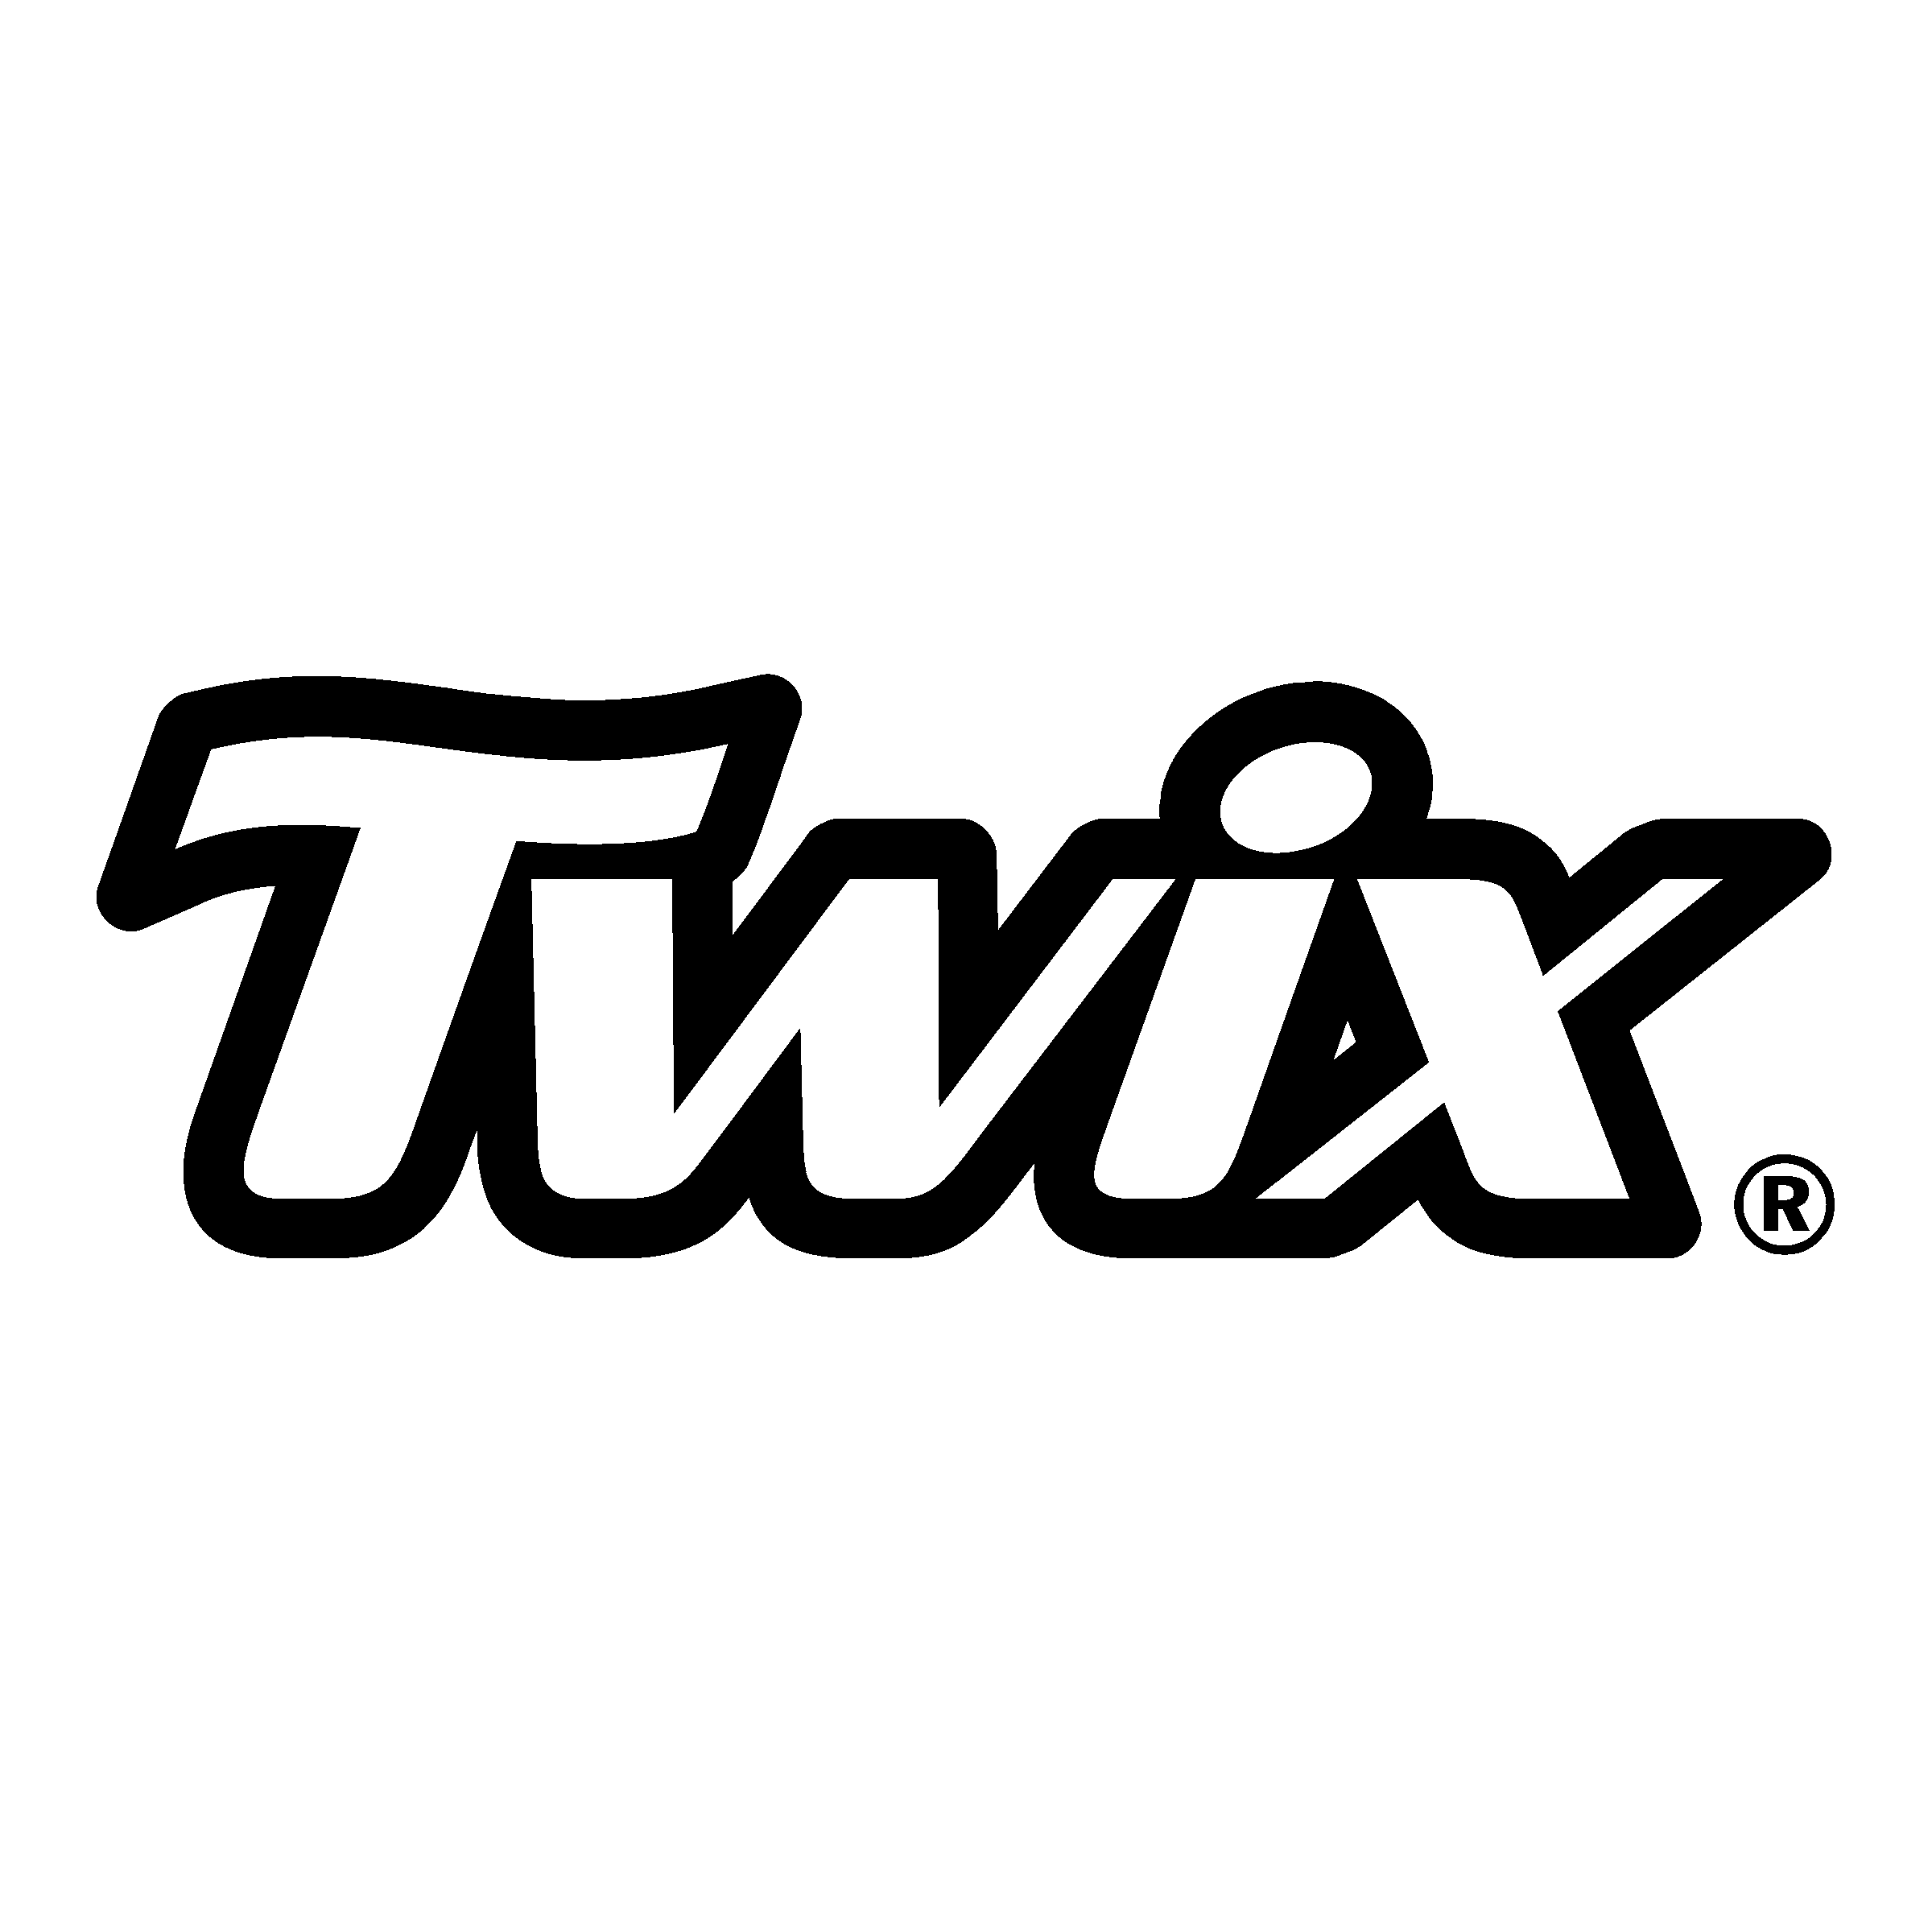 twix-2-logo-black-and-white.png